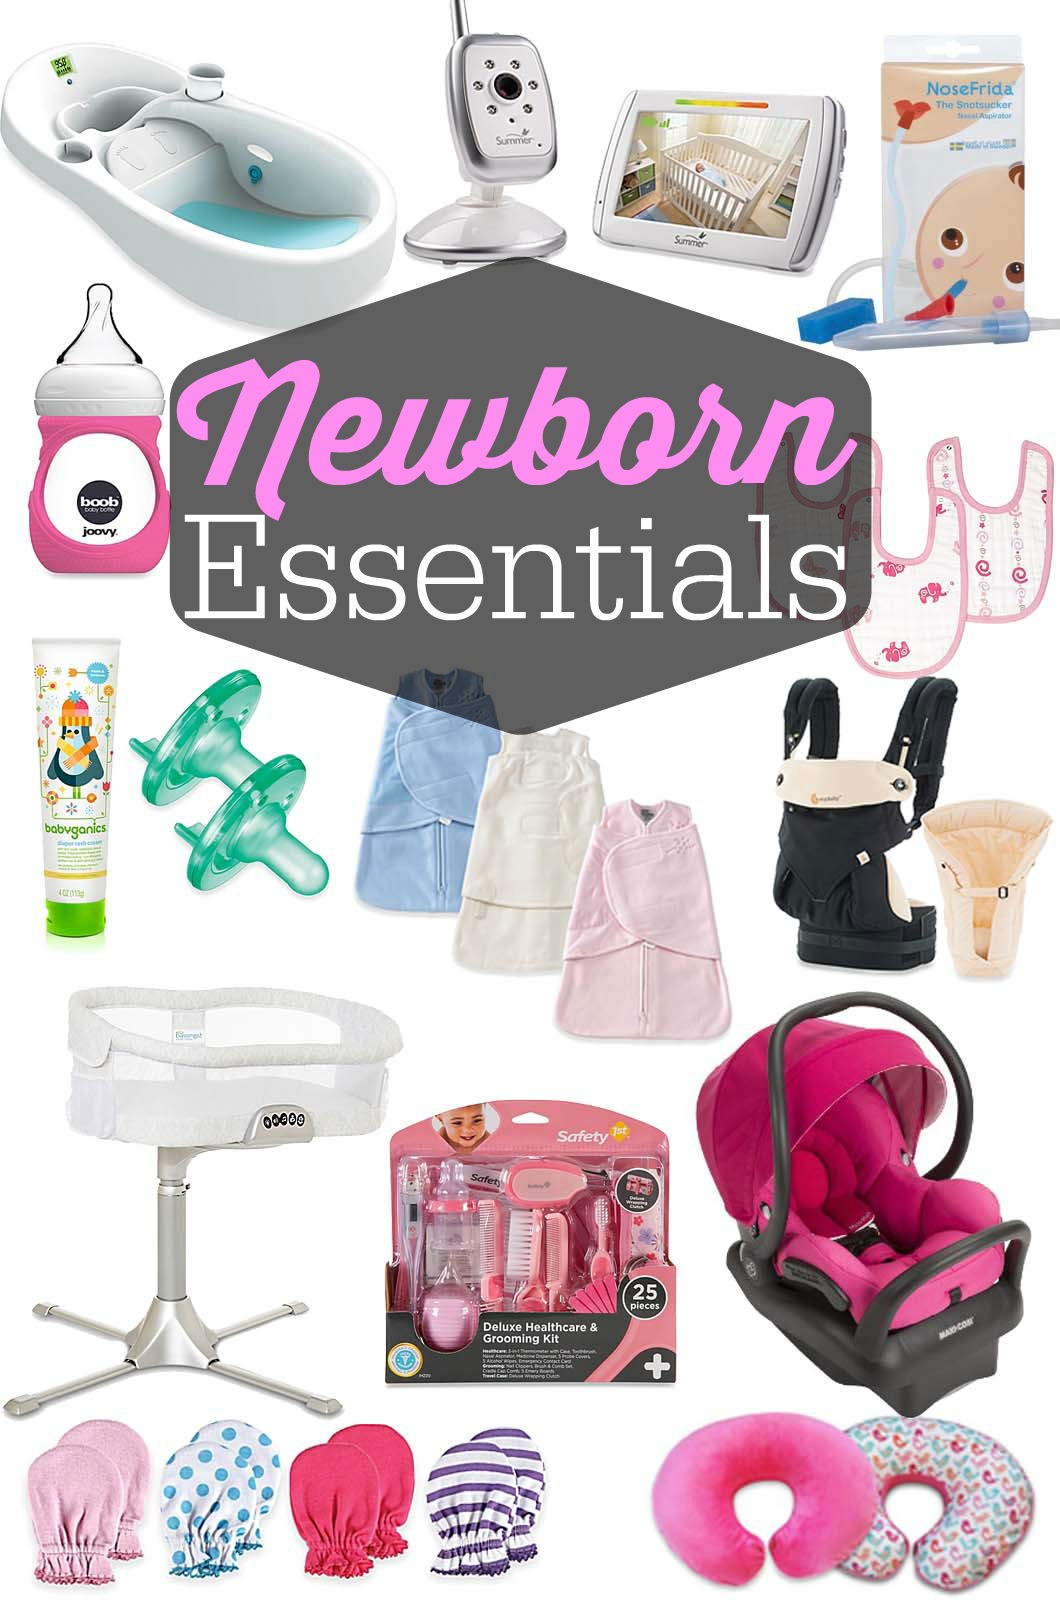 Newborn Essentials with buybuy BABY